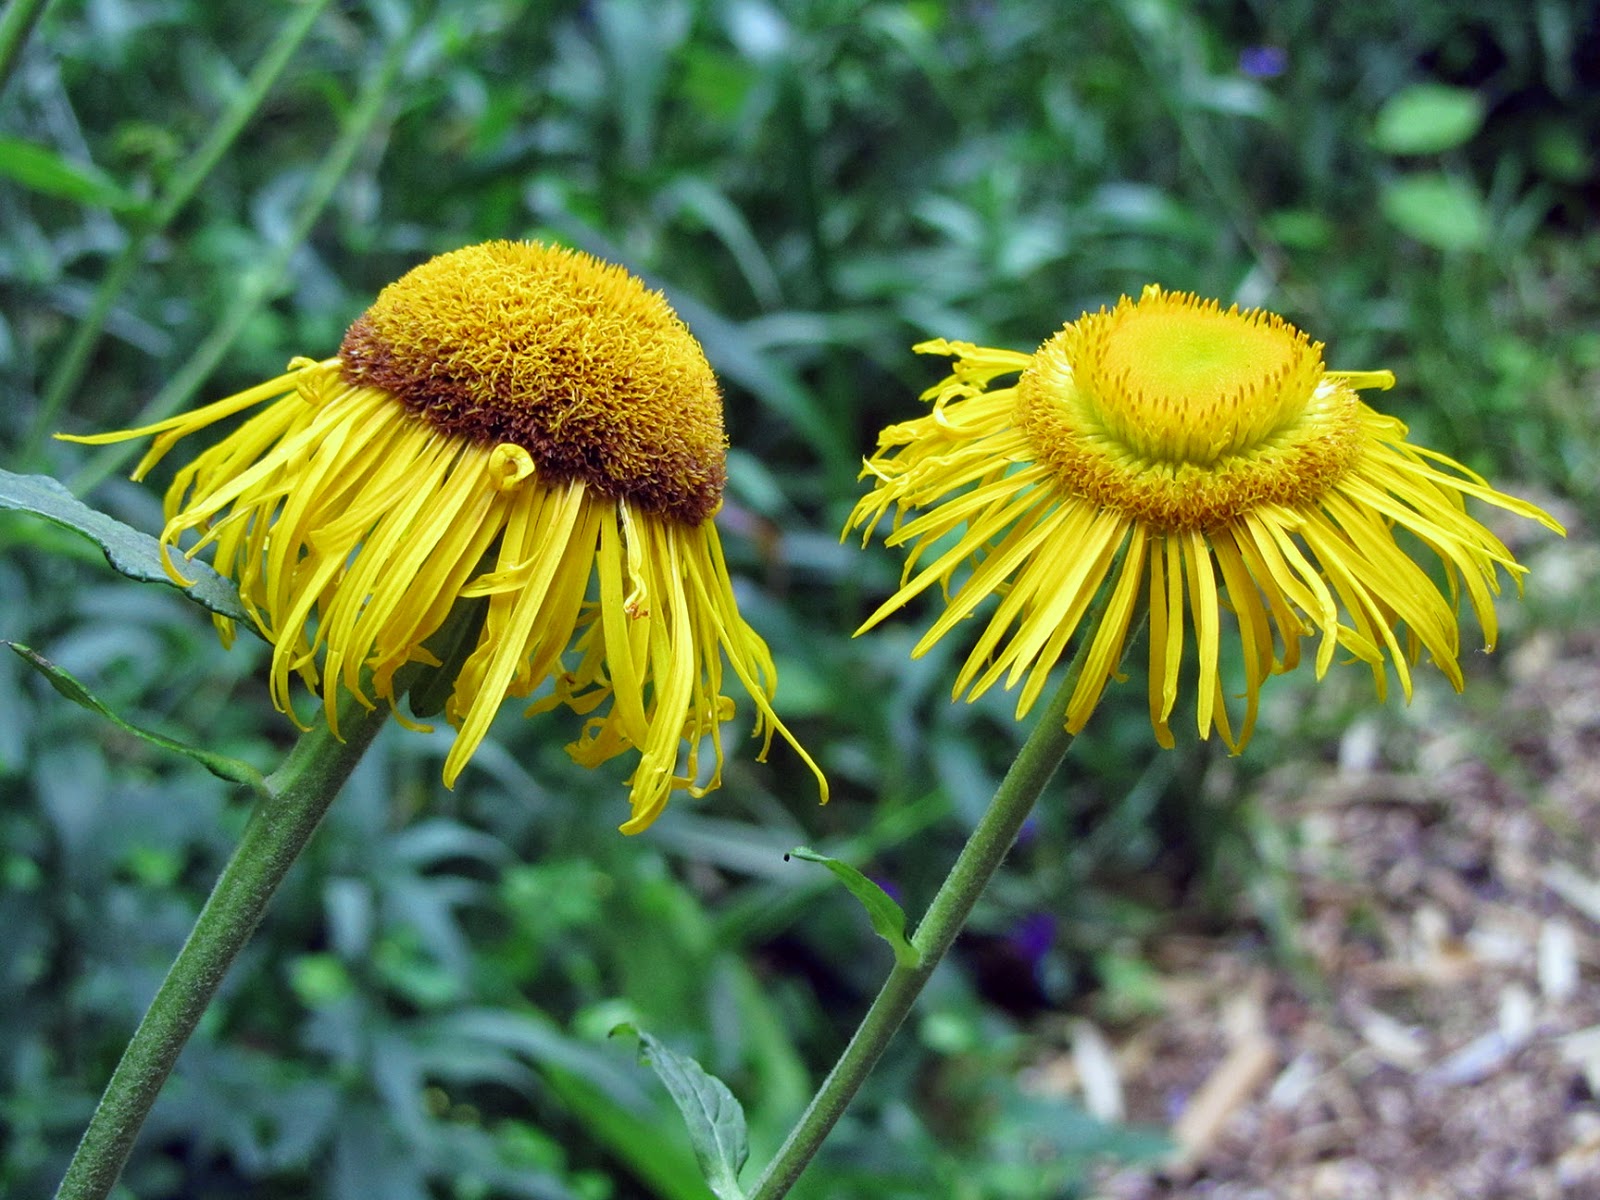 ruffled looking yellow flowers